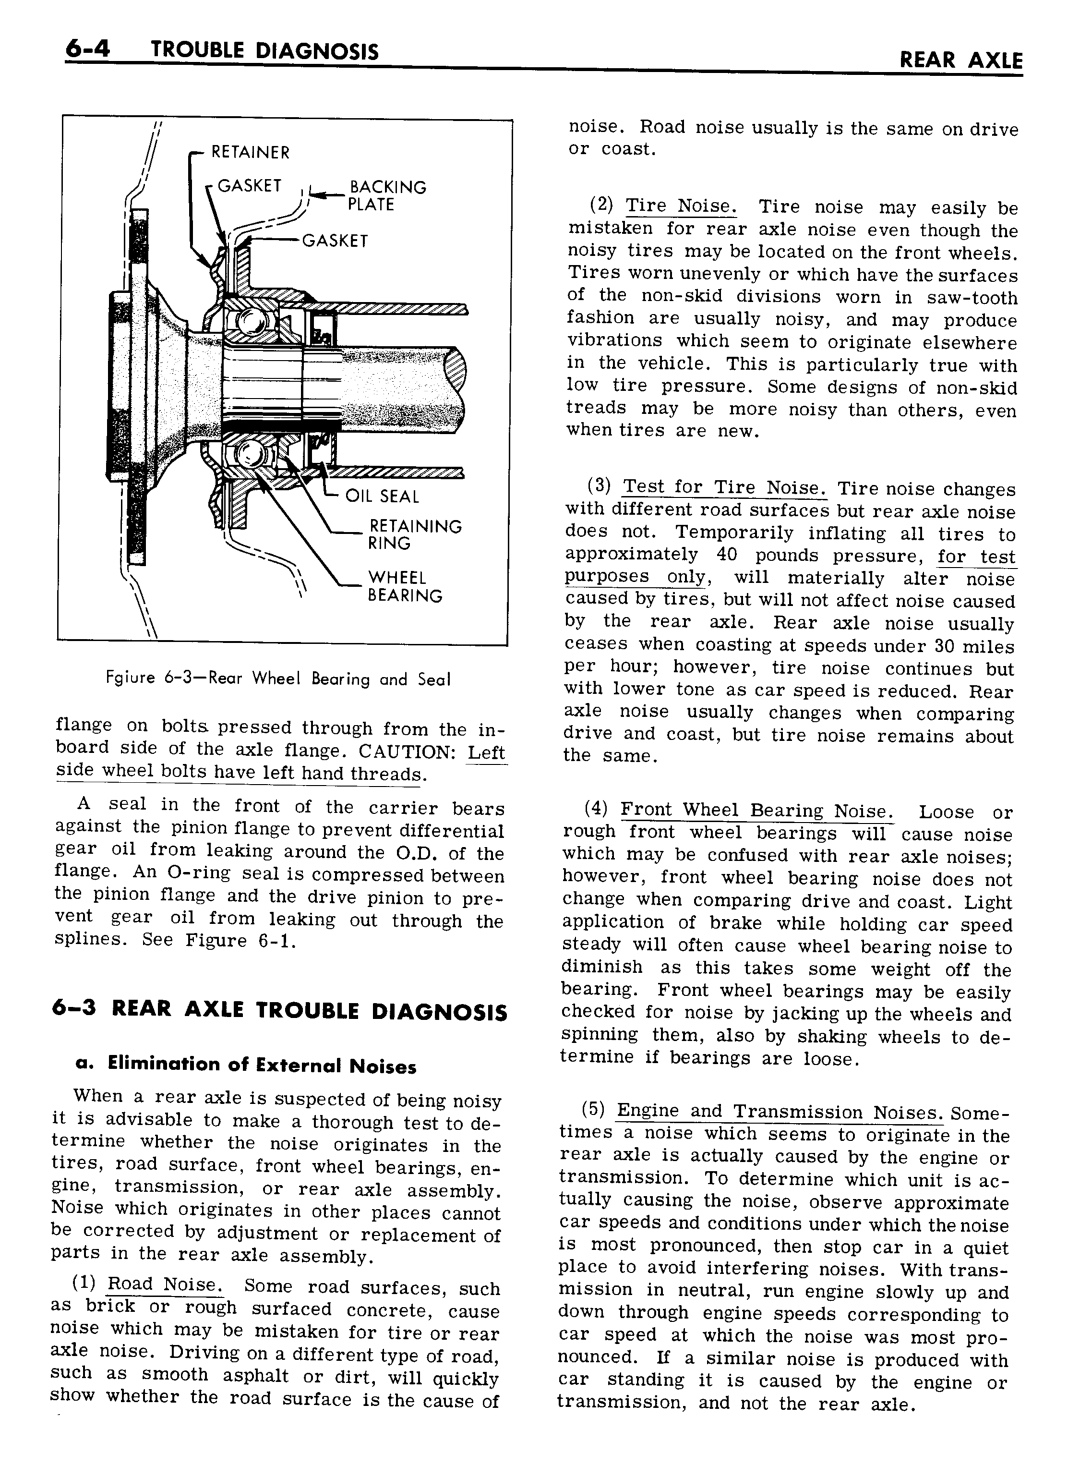 n_06 1961 Buick Shop Manual - Rear Axle-004-004.jpg